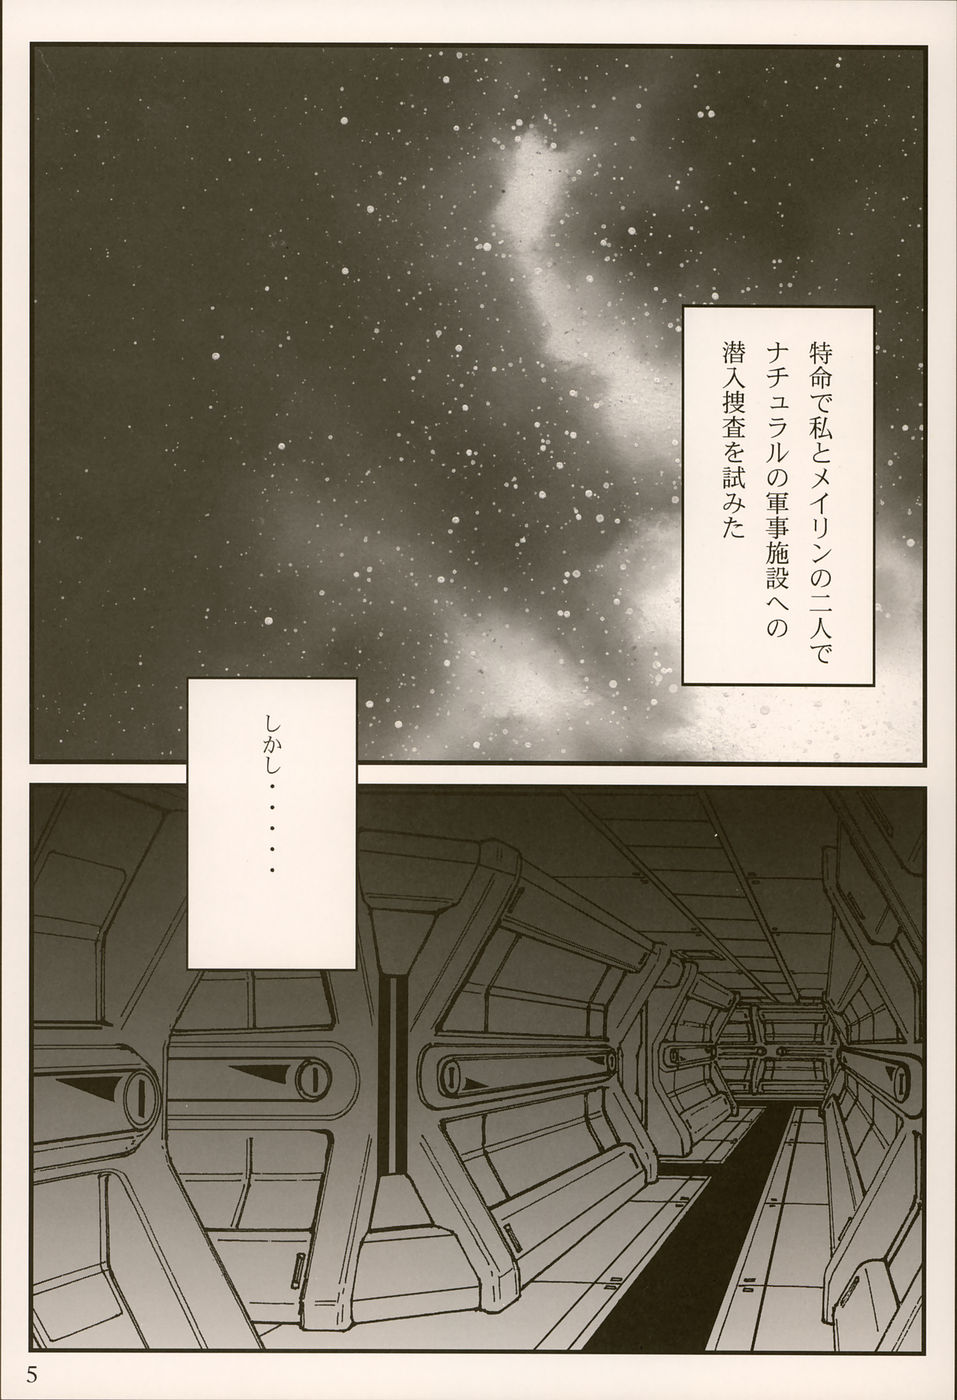 [Gundam Seed Destiny][Intendou] Seed Destiny Angel 1 